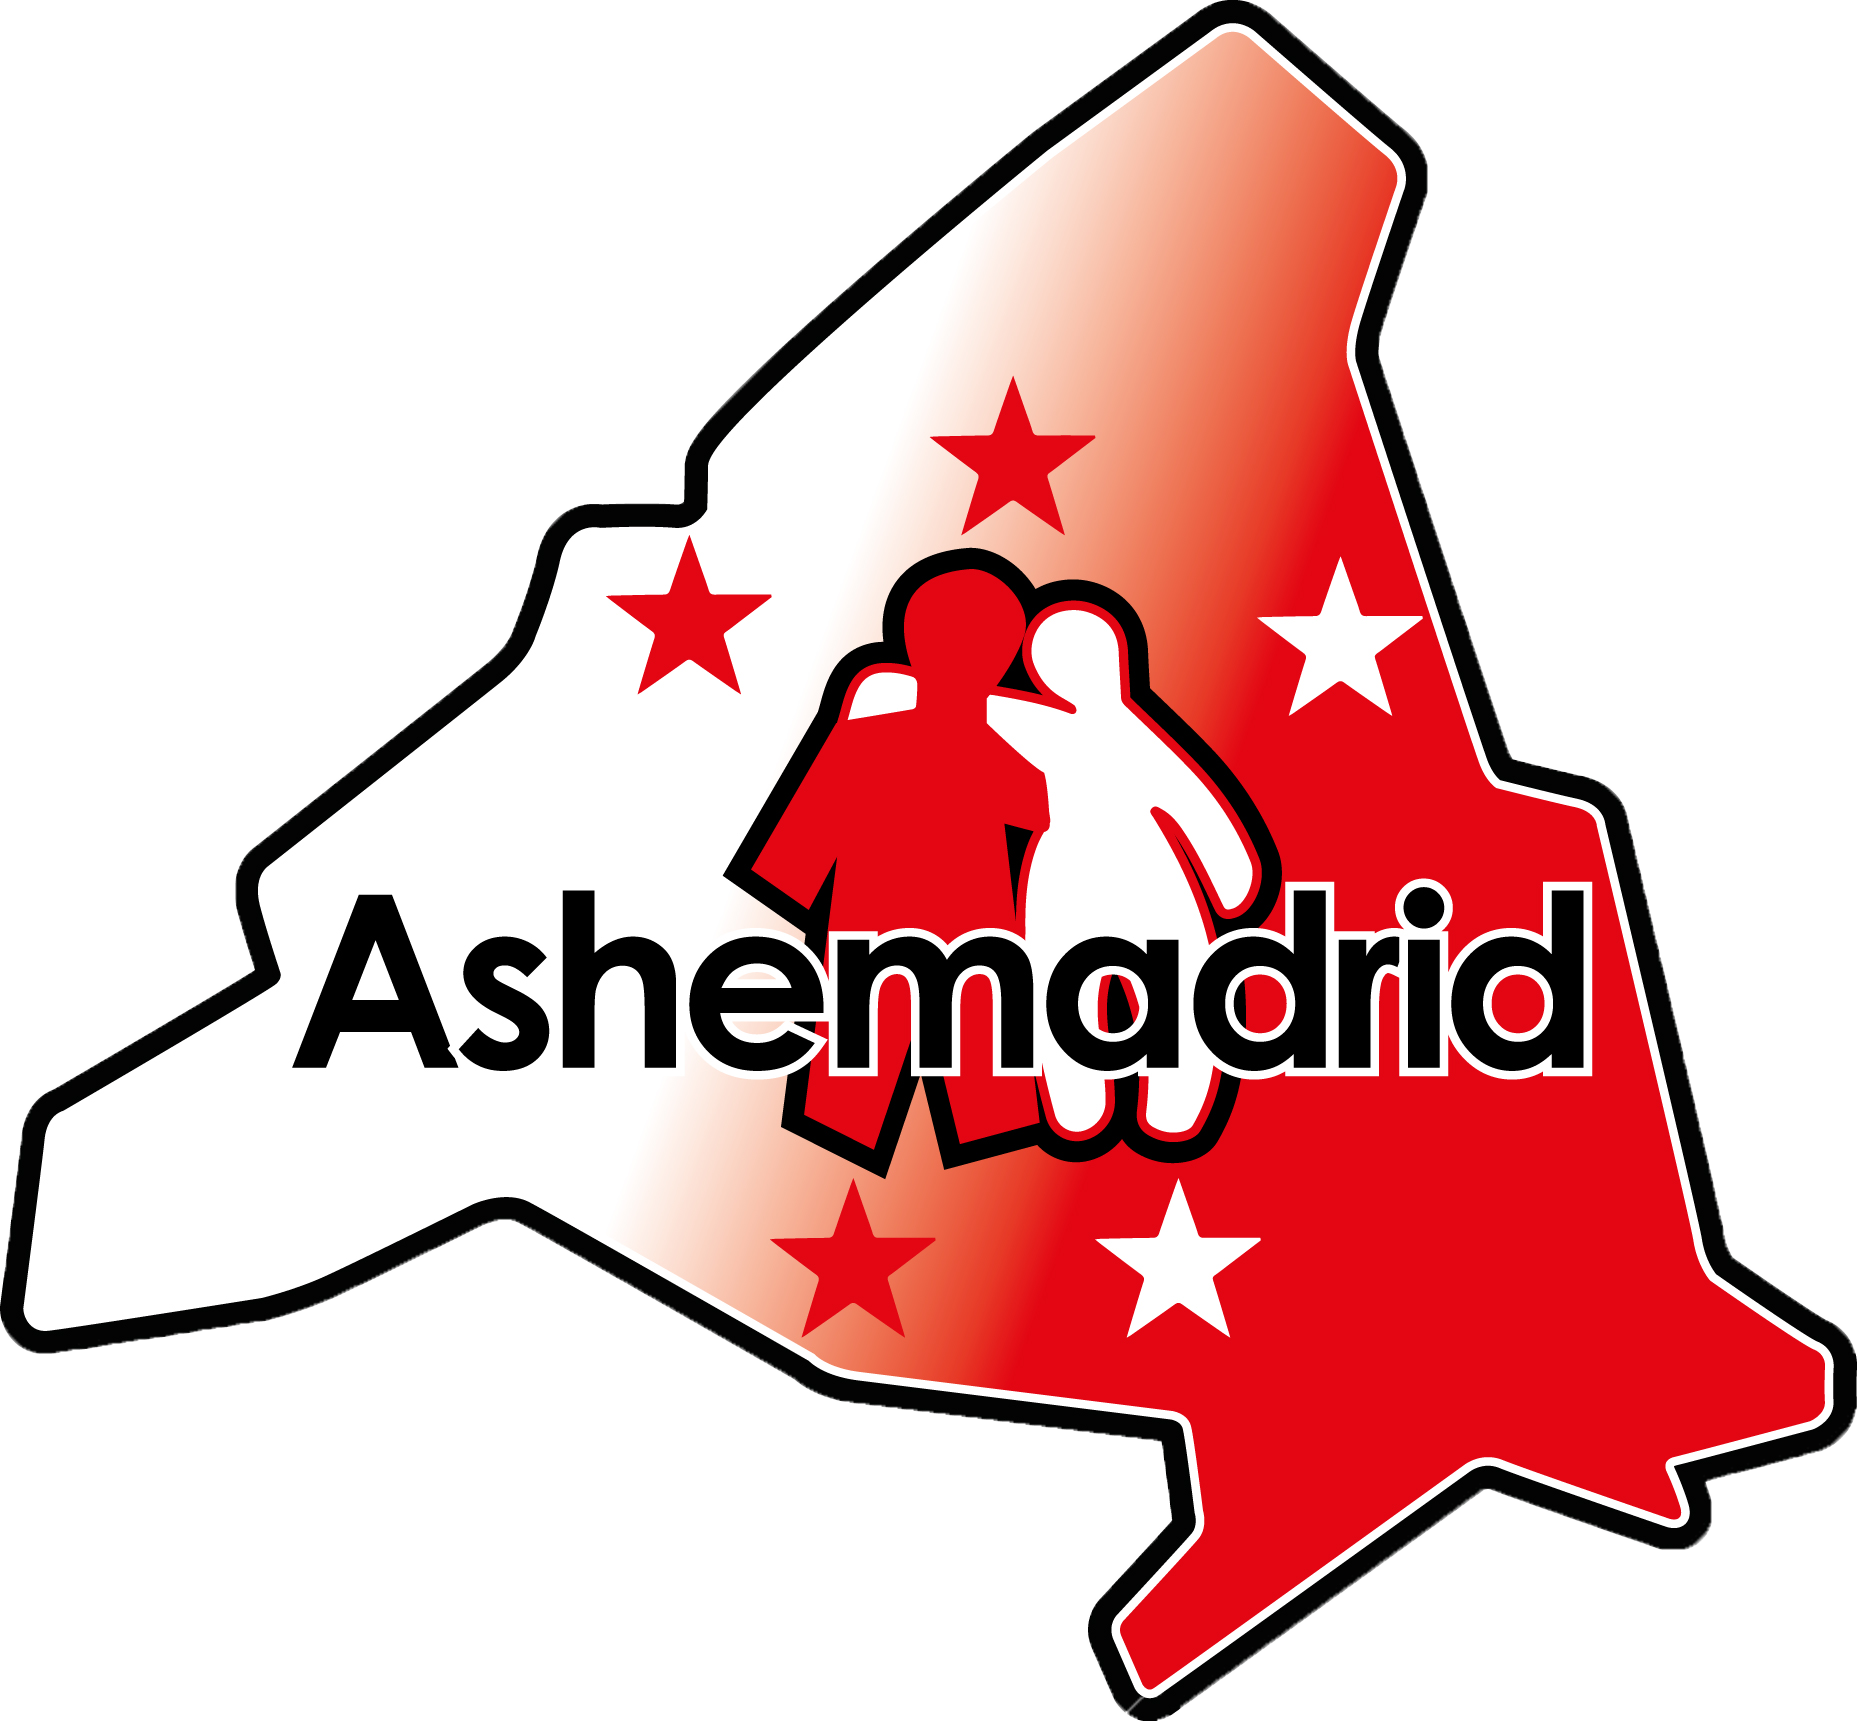 logo ashemadrid